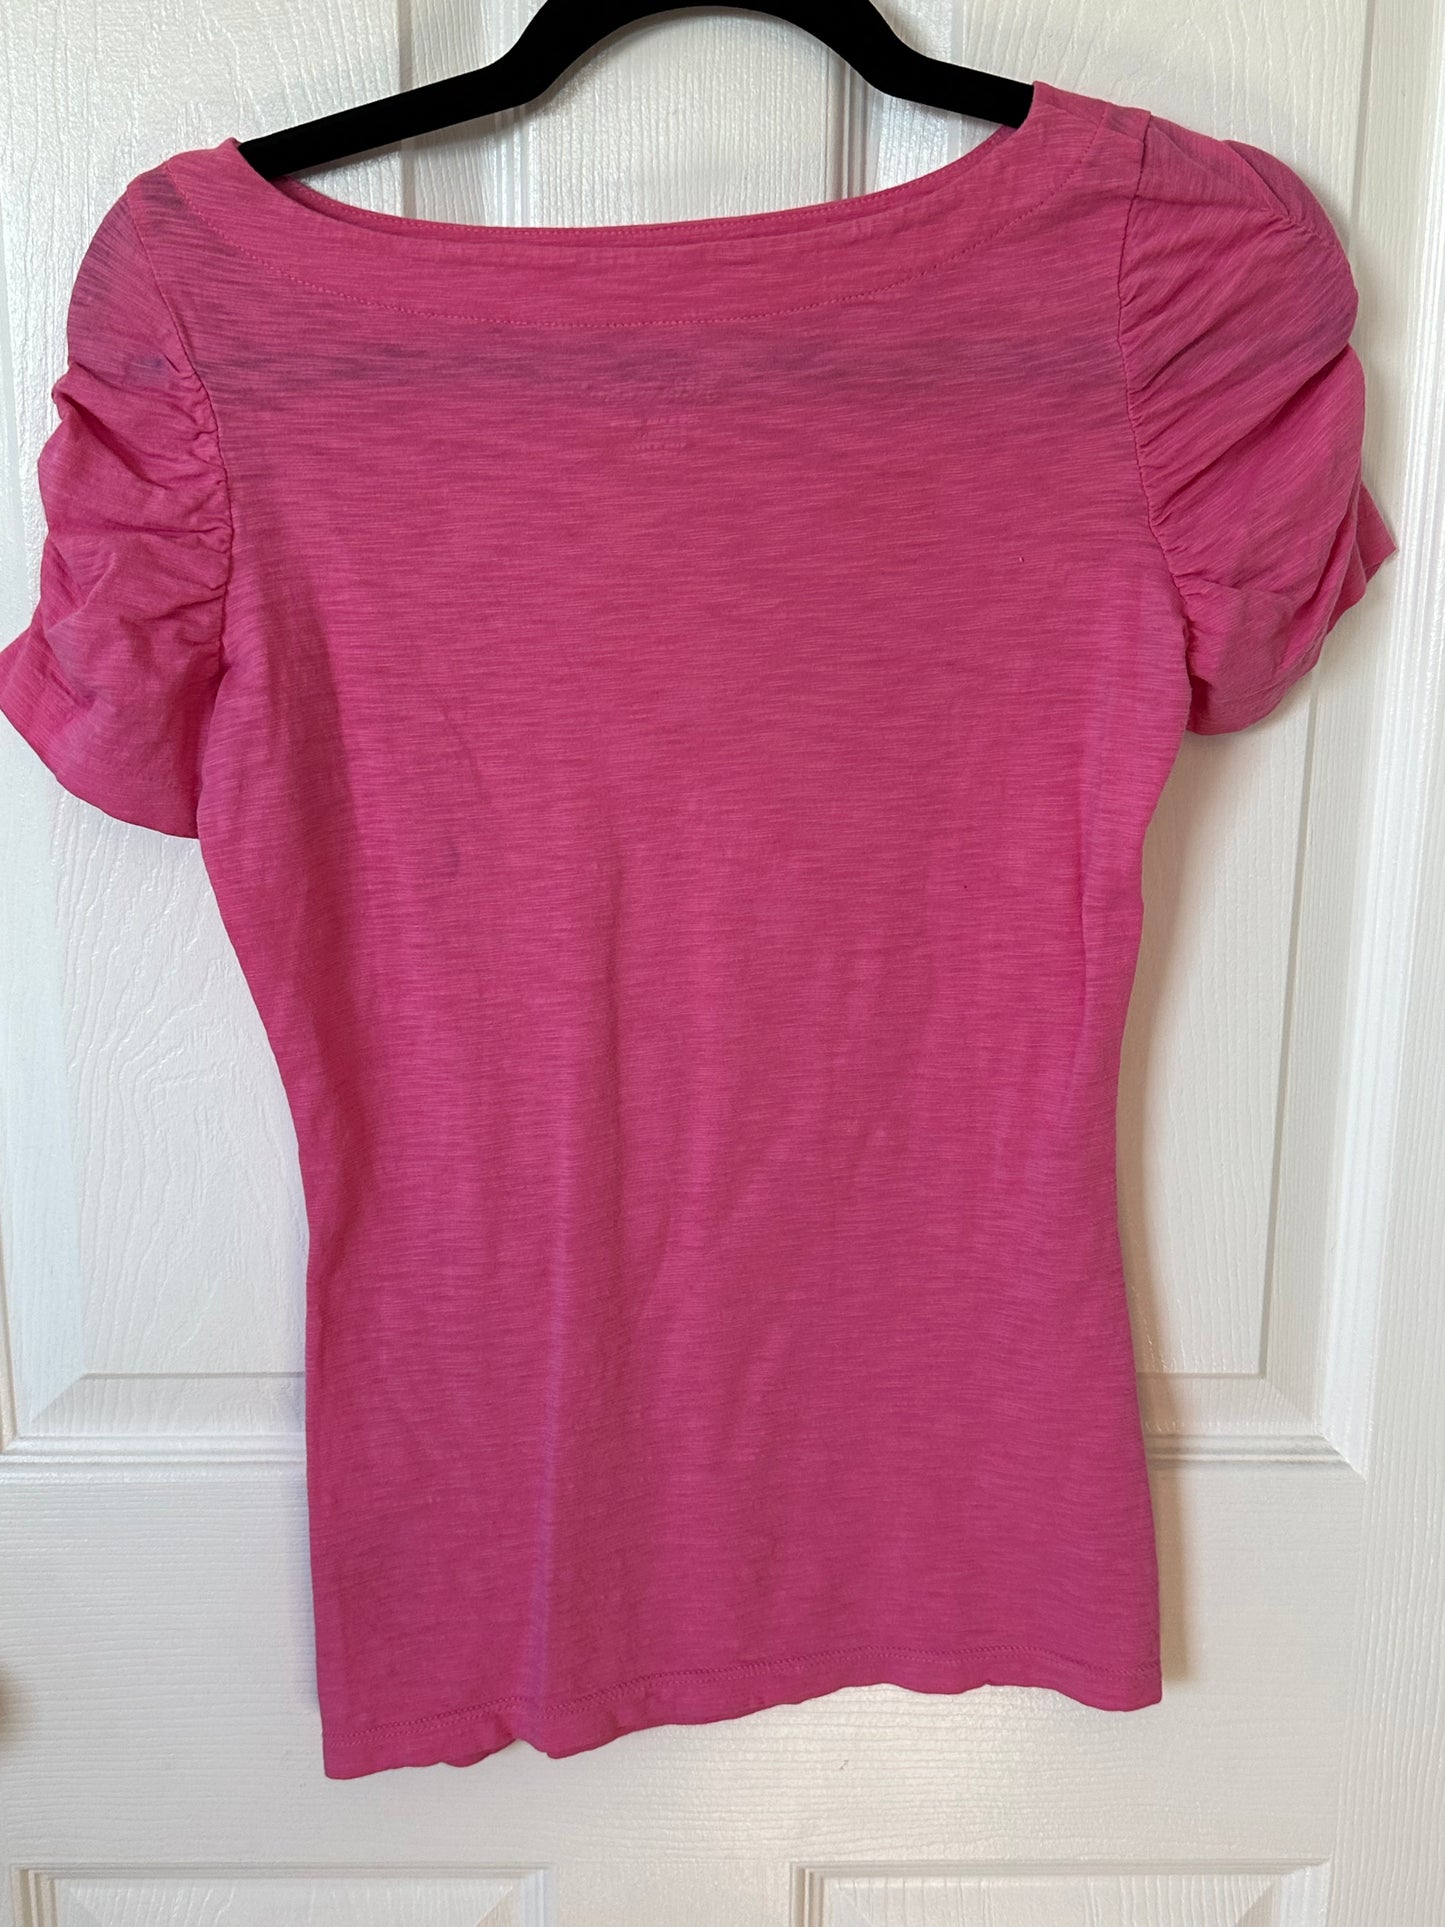 Lilly Pulitzer Pink Sz XSmall Shirt Top